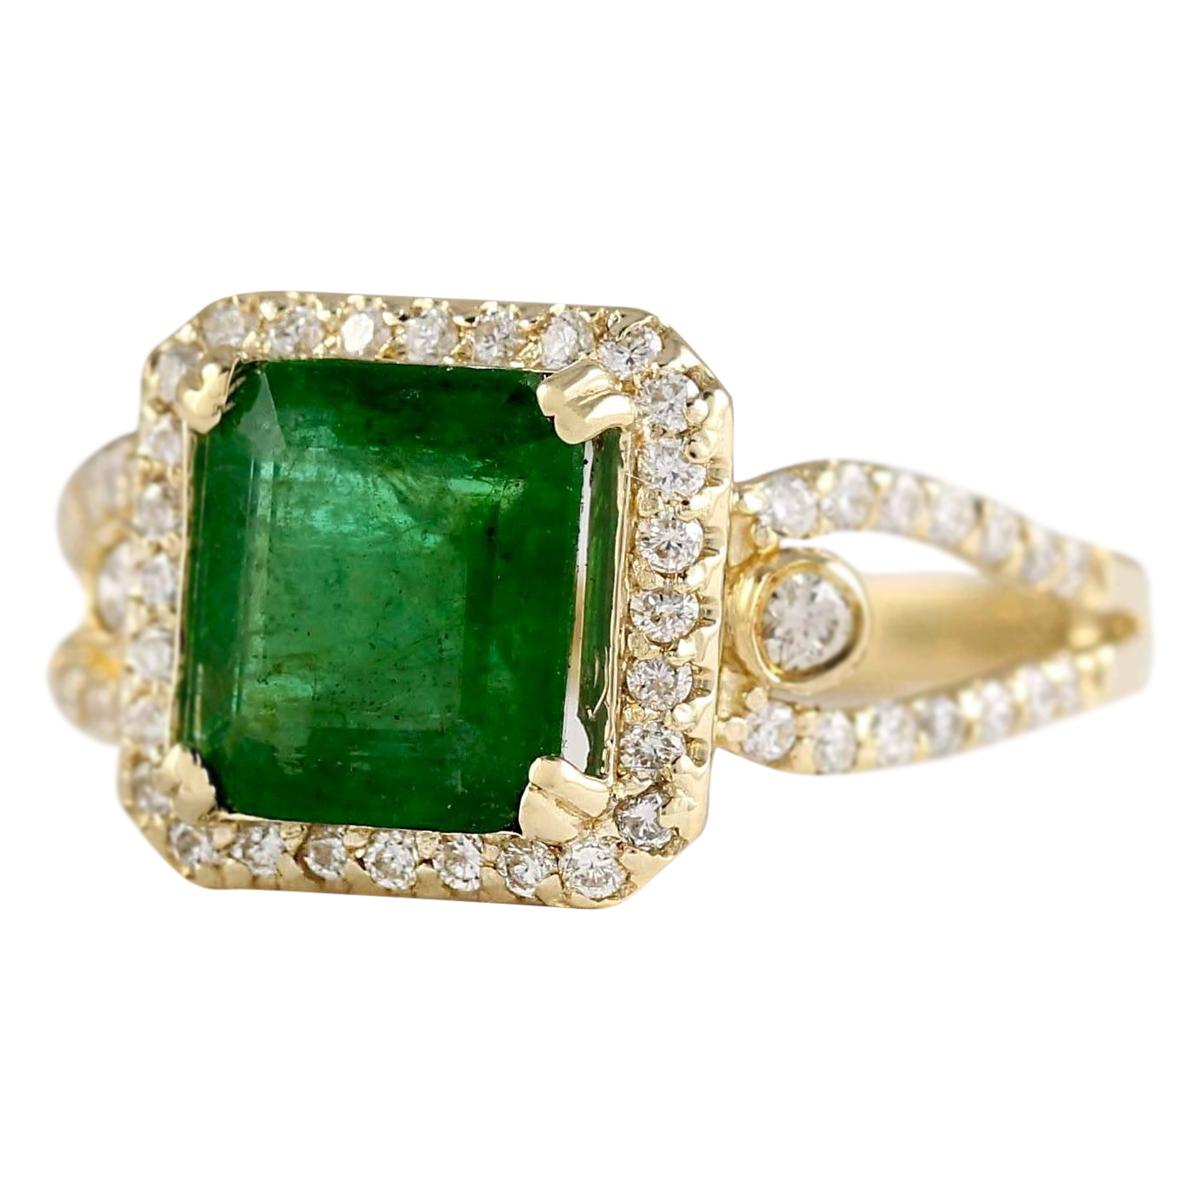 2.90 Carat Natural Emerald 14 Karat Yellow Gold Diamond Ring
Stamped: 184K Yellow Gold
Total Ring Weight: 5.0 Grams
Total Natural Emerald Weight is 2.35 Carat (Measures: 8.50x8.50 mm)
Color: Green
Total Natural Diamond Weight is 0.55 Carat
Color: